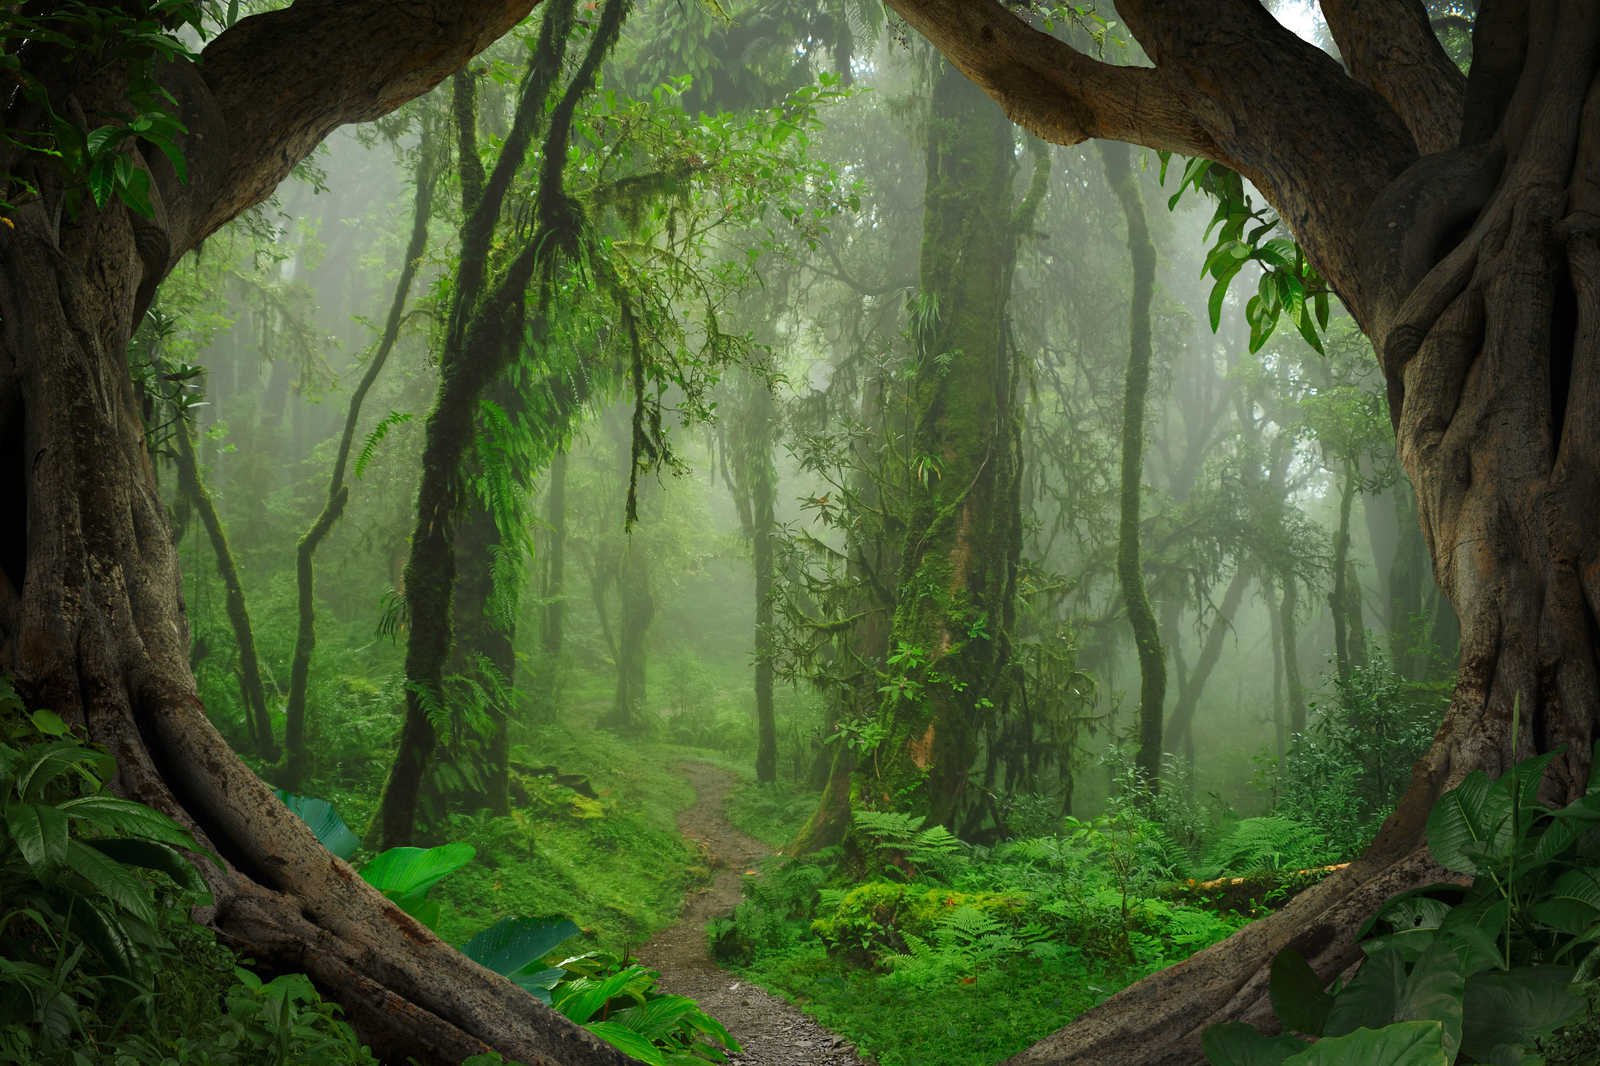             Tela Magic Tropical Forest - 0,90 m x 0,60 m
        